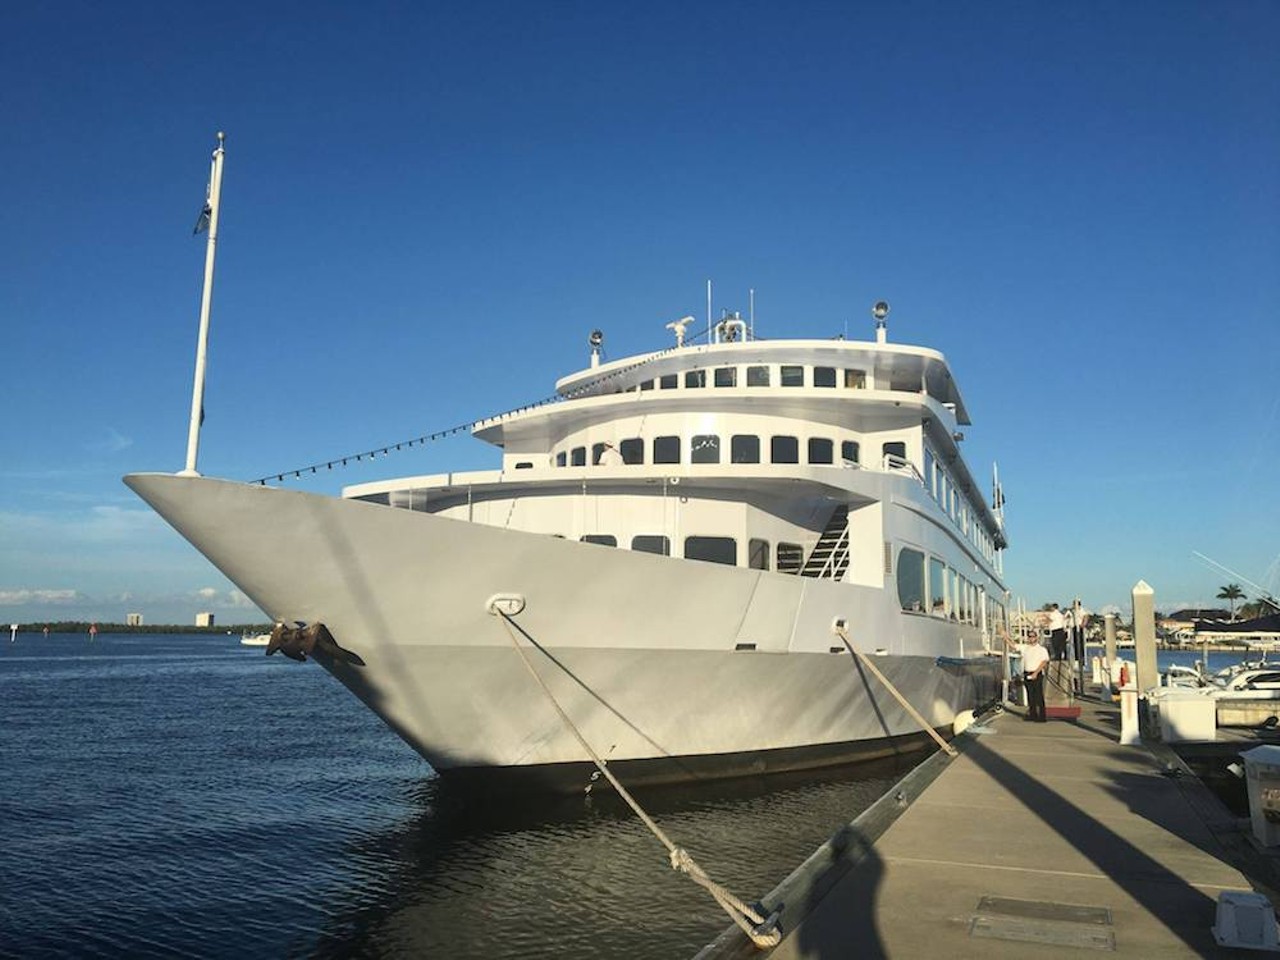 NYE Celebration Cruise with Tampa&#146;s Yacht StarShip
Dec. 31: 10 p.m.-12:30 a.m. 
Photo via Yacht StarShip Cruises & Events